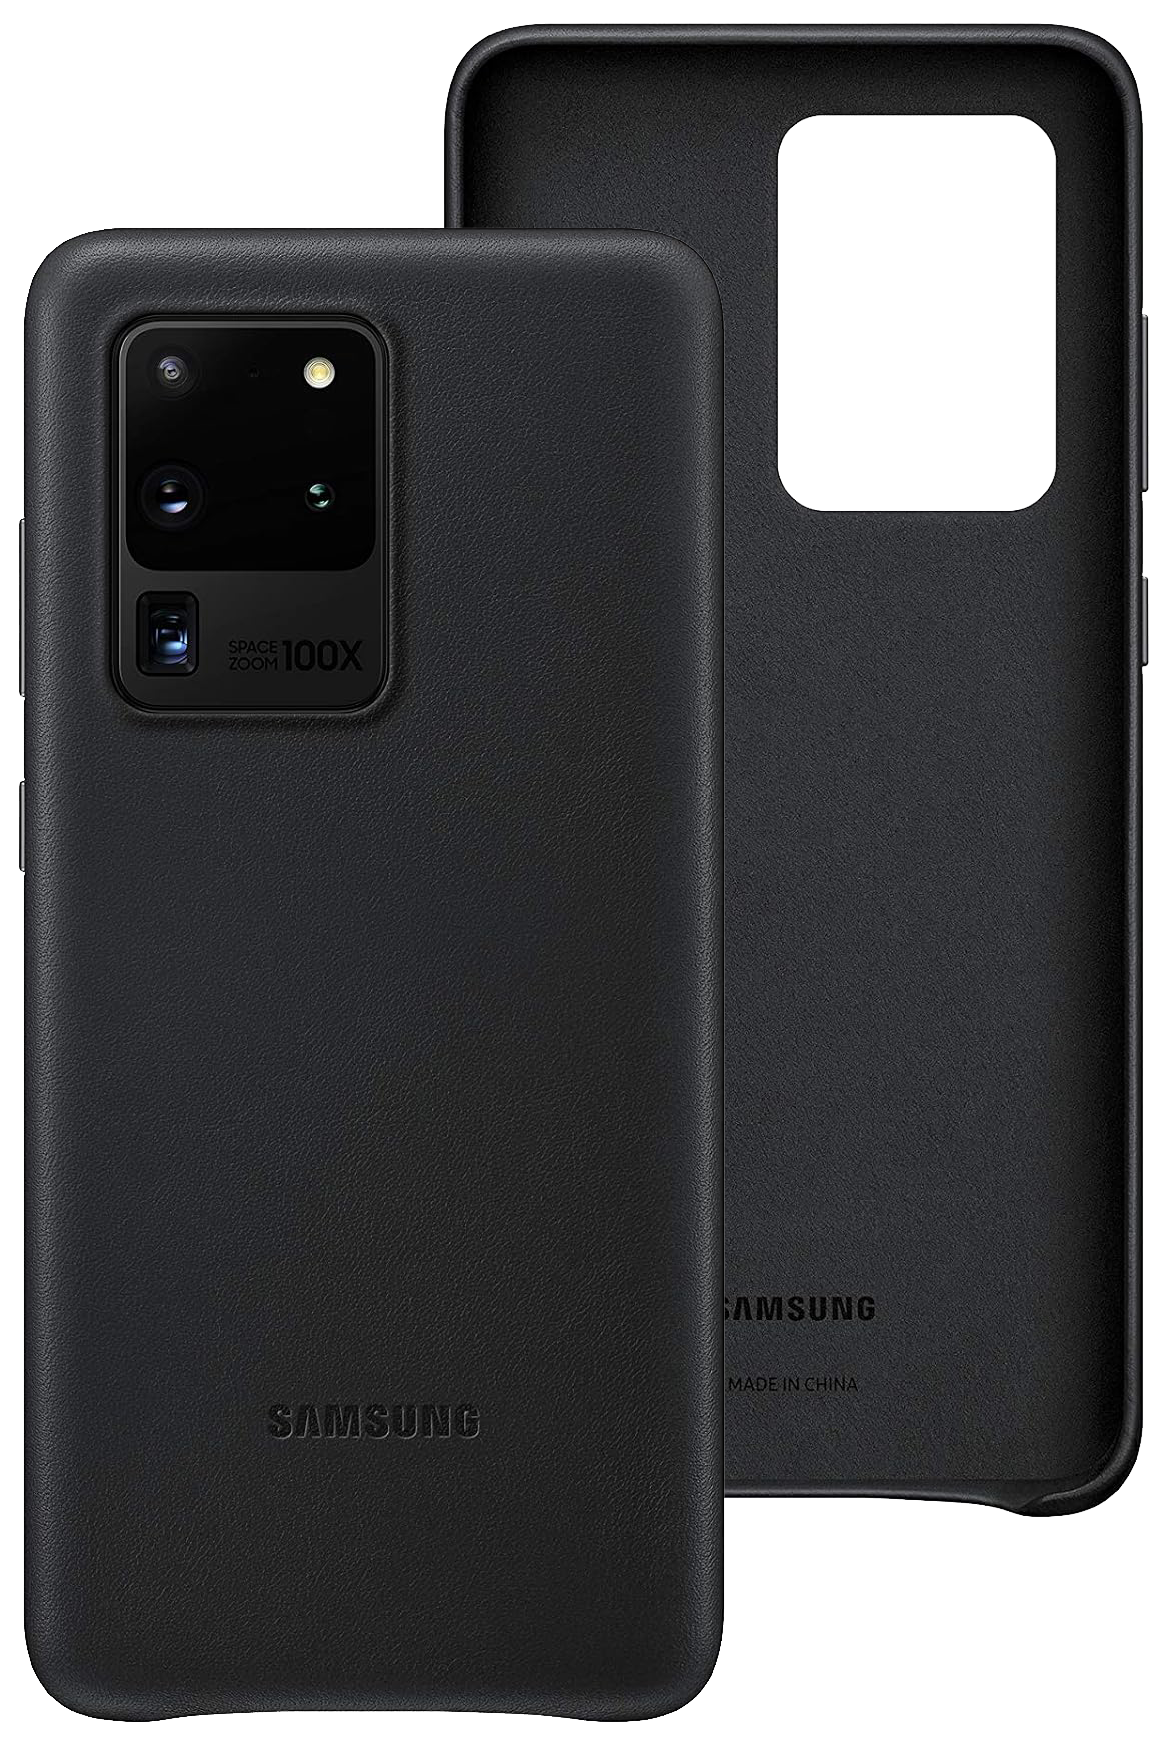 Samsung Leder Cover (Galaxy S20 Ultra) schwarz - Ohne Vertrag